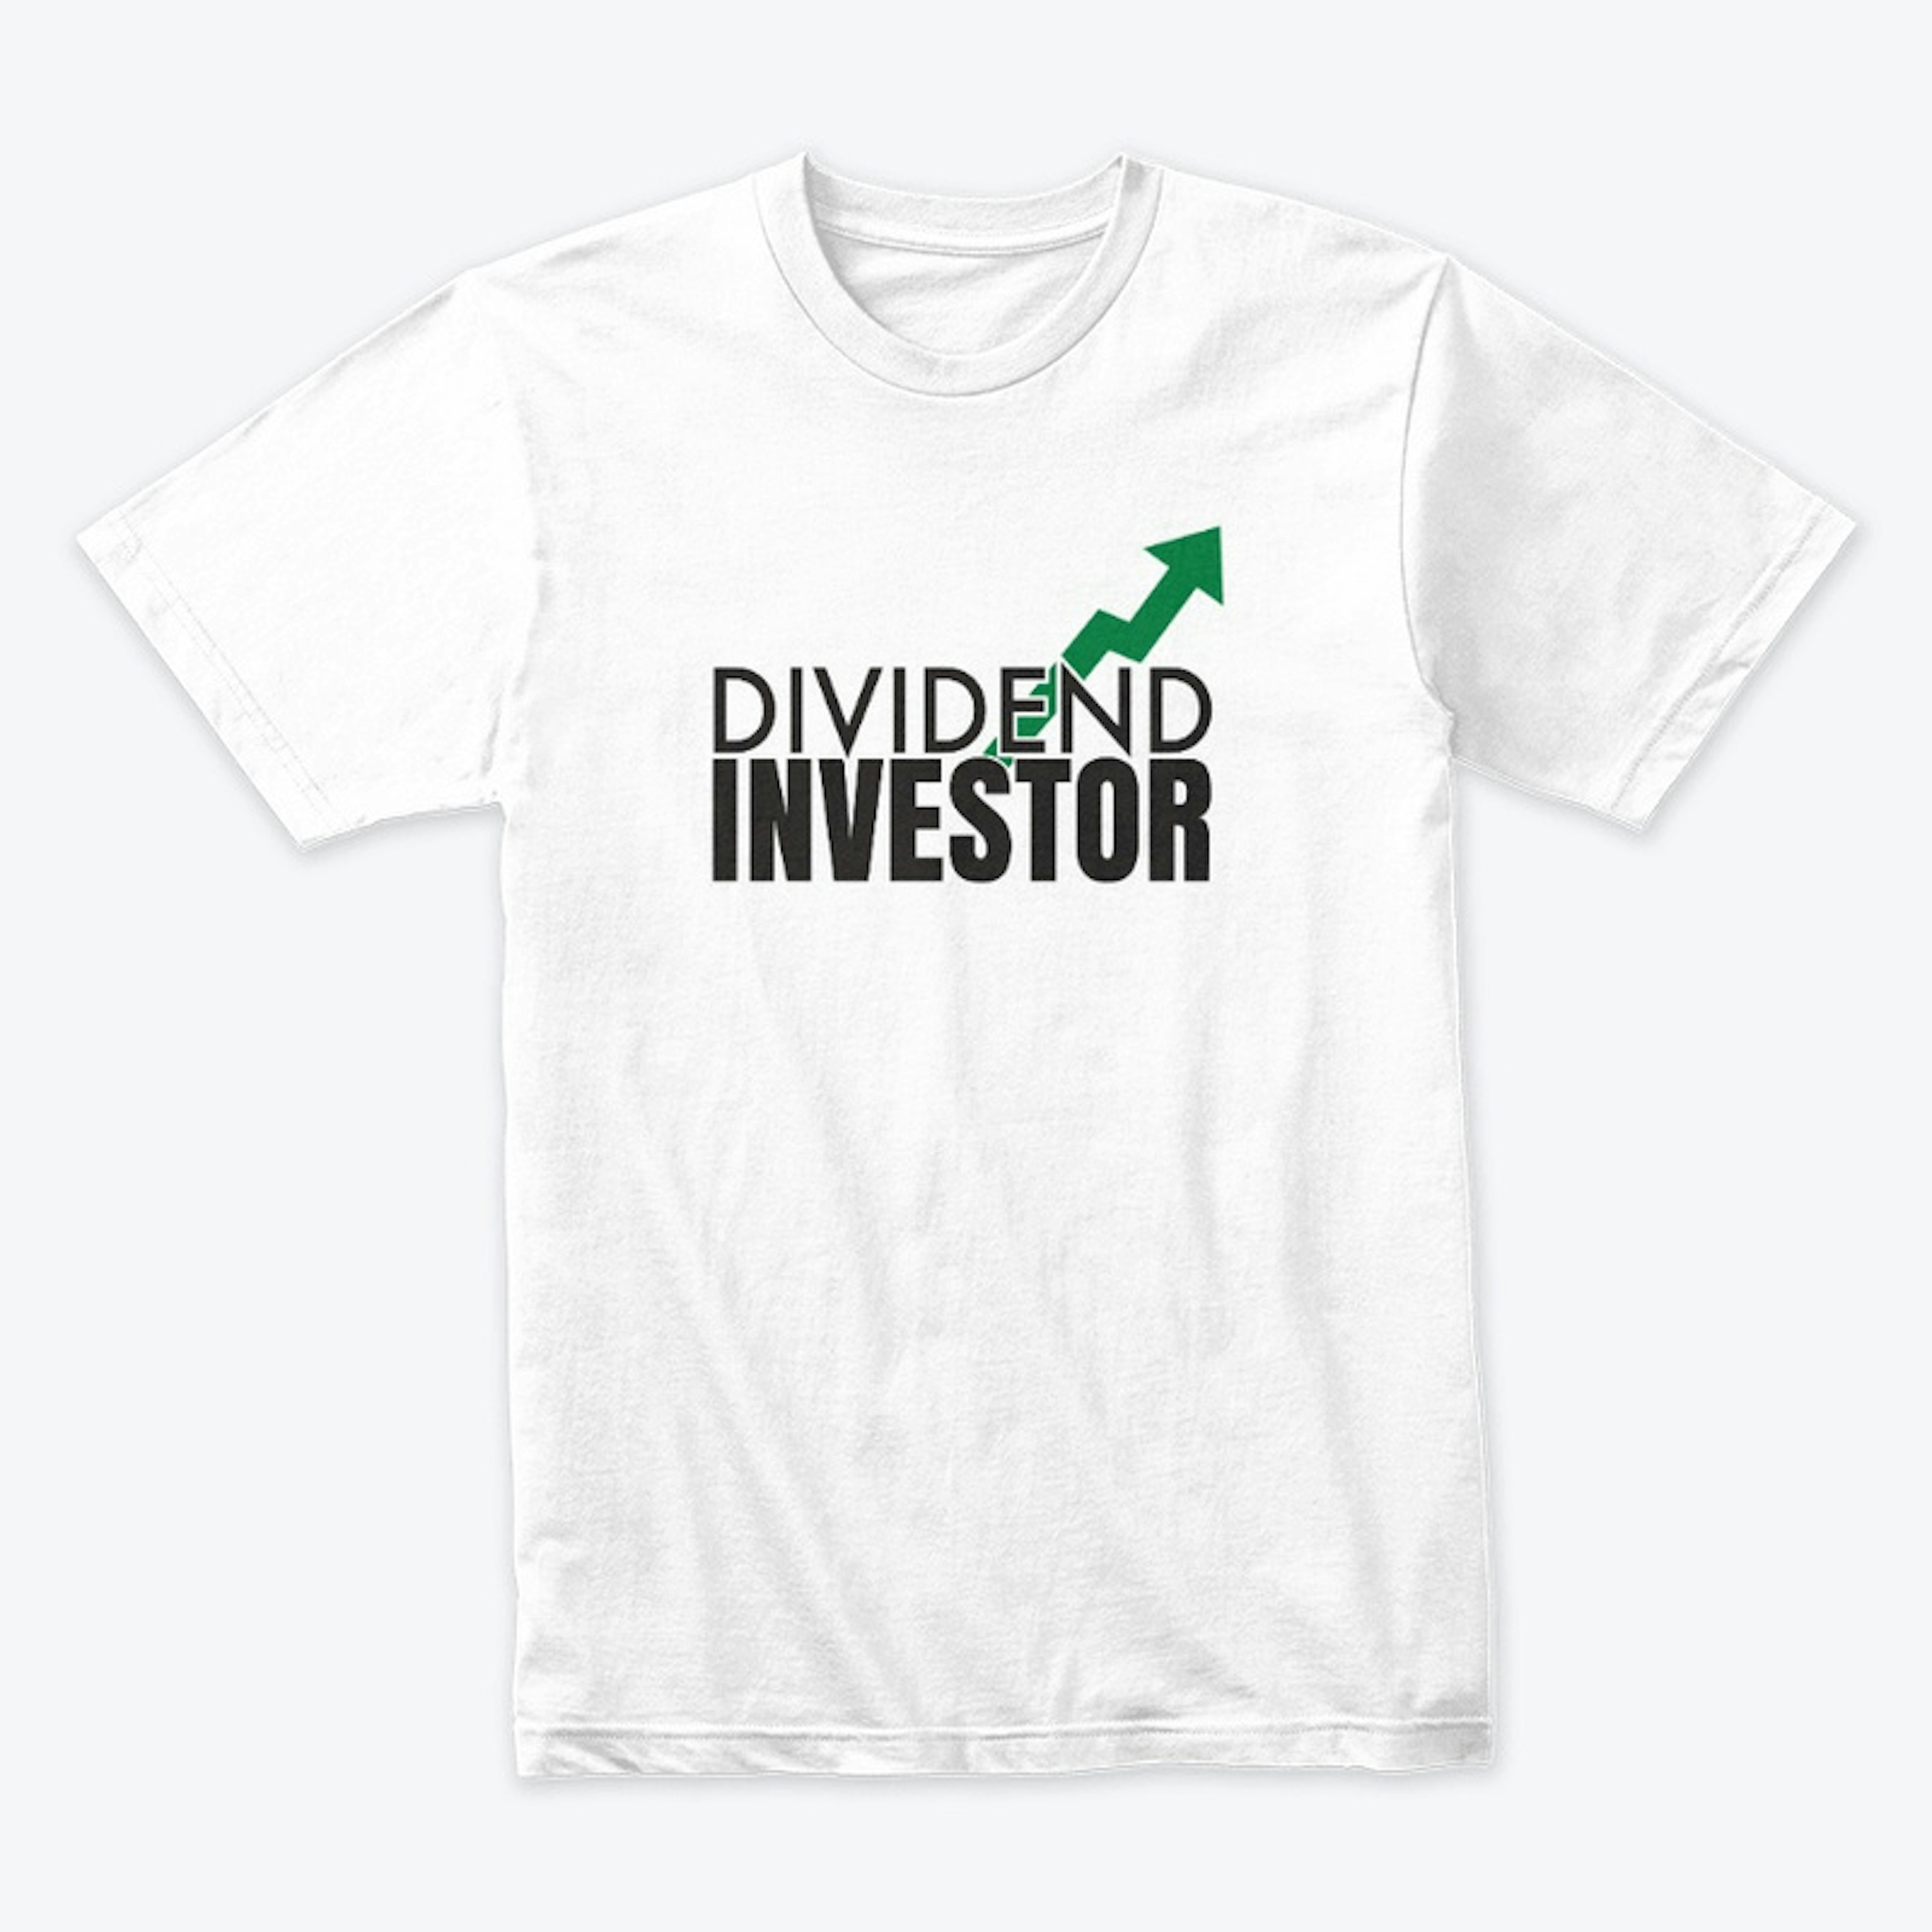 Dividend Investor (White T-Shirt)